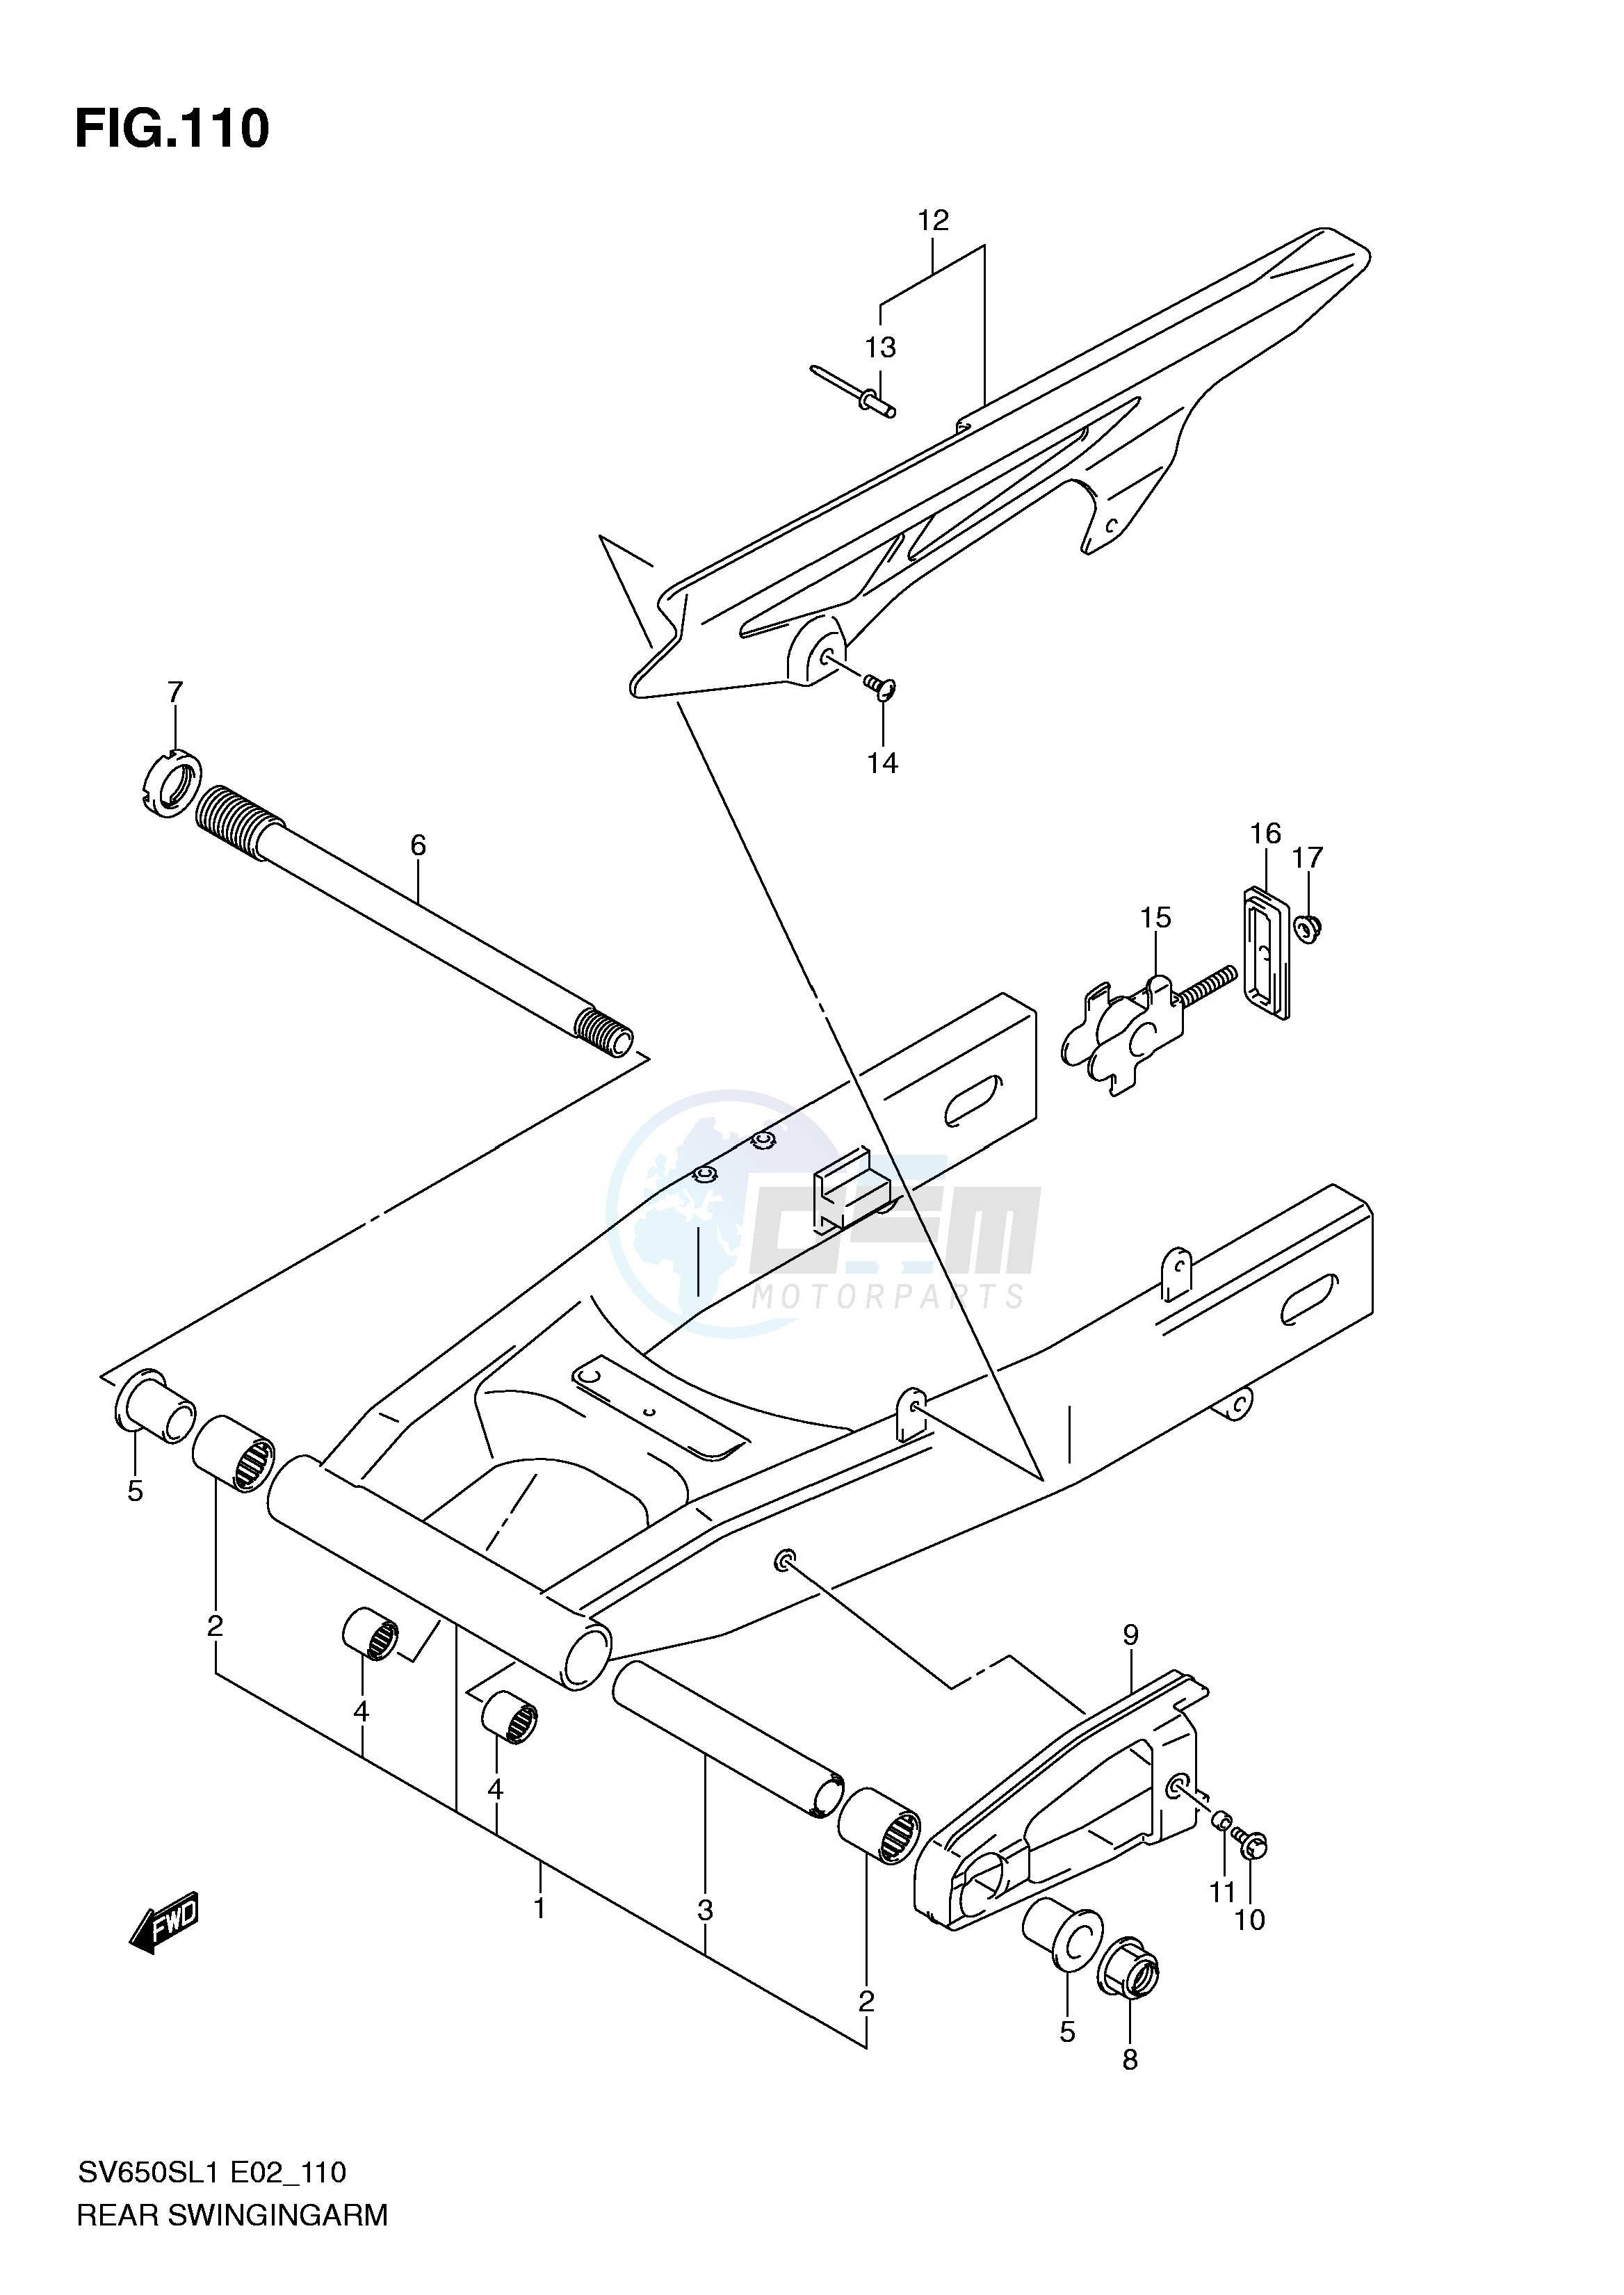 REAR SWINGING ARM (SV650SL1 E2) blueprint